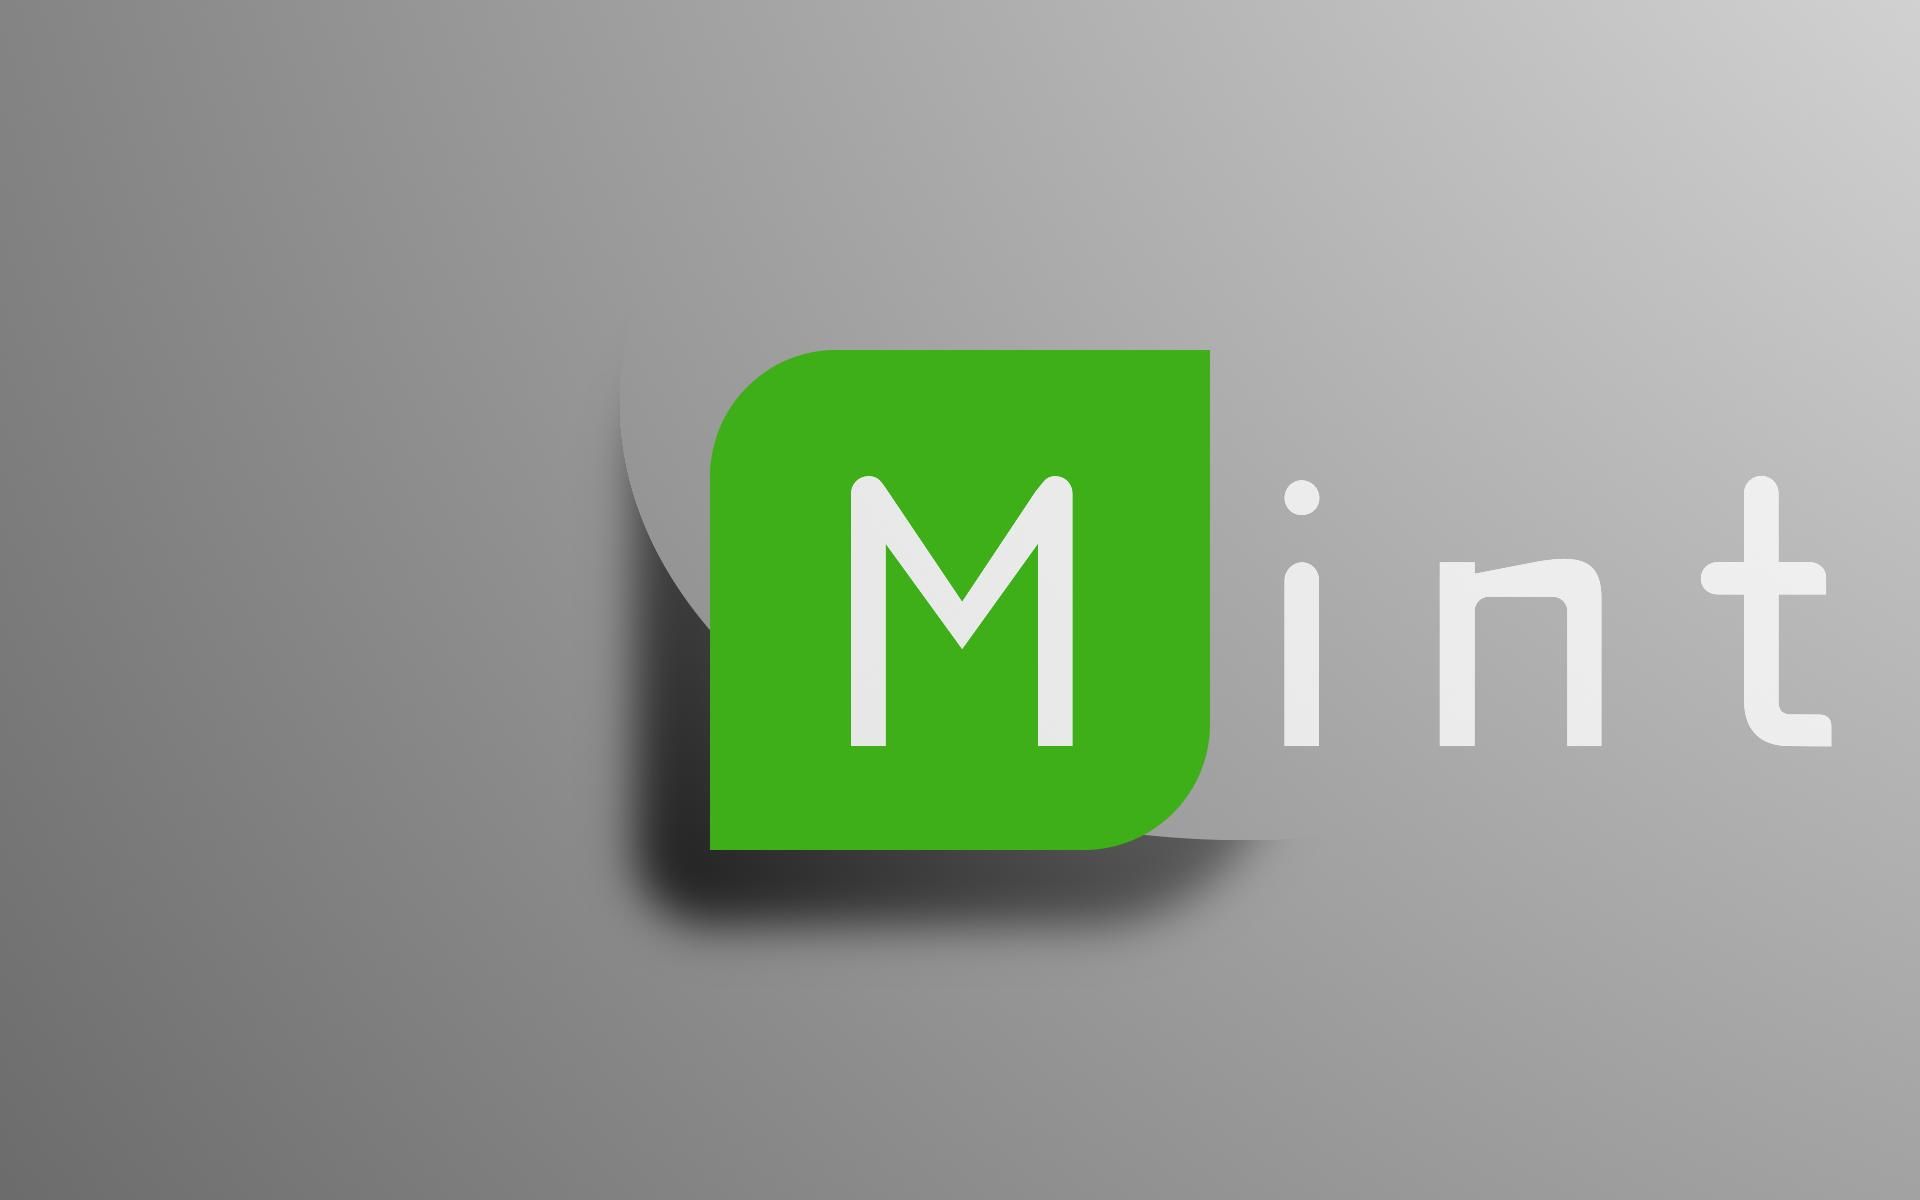 More information about "Το Linux Mint 19.3 Cinnamon έρχεται μέχρι τα Χριστούγεννα! Διαθέσιμη η beta με όλα τα νέα χαρακτηριστικά"